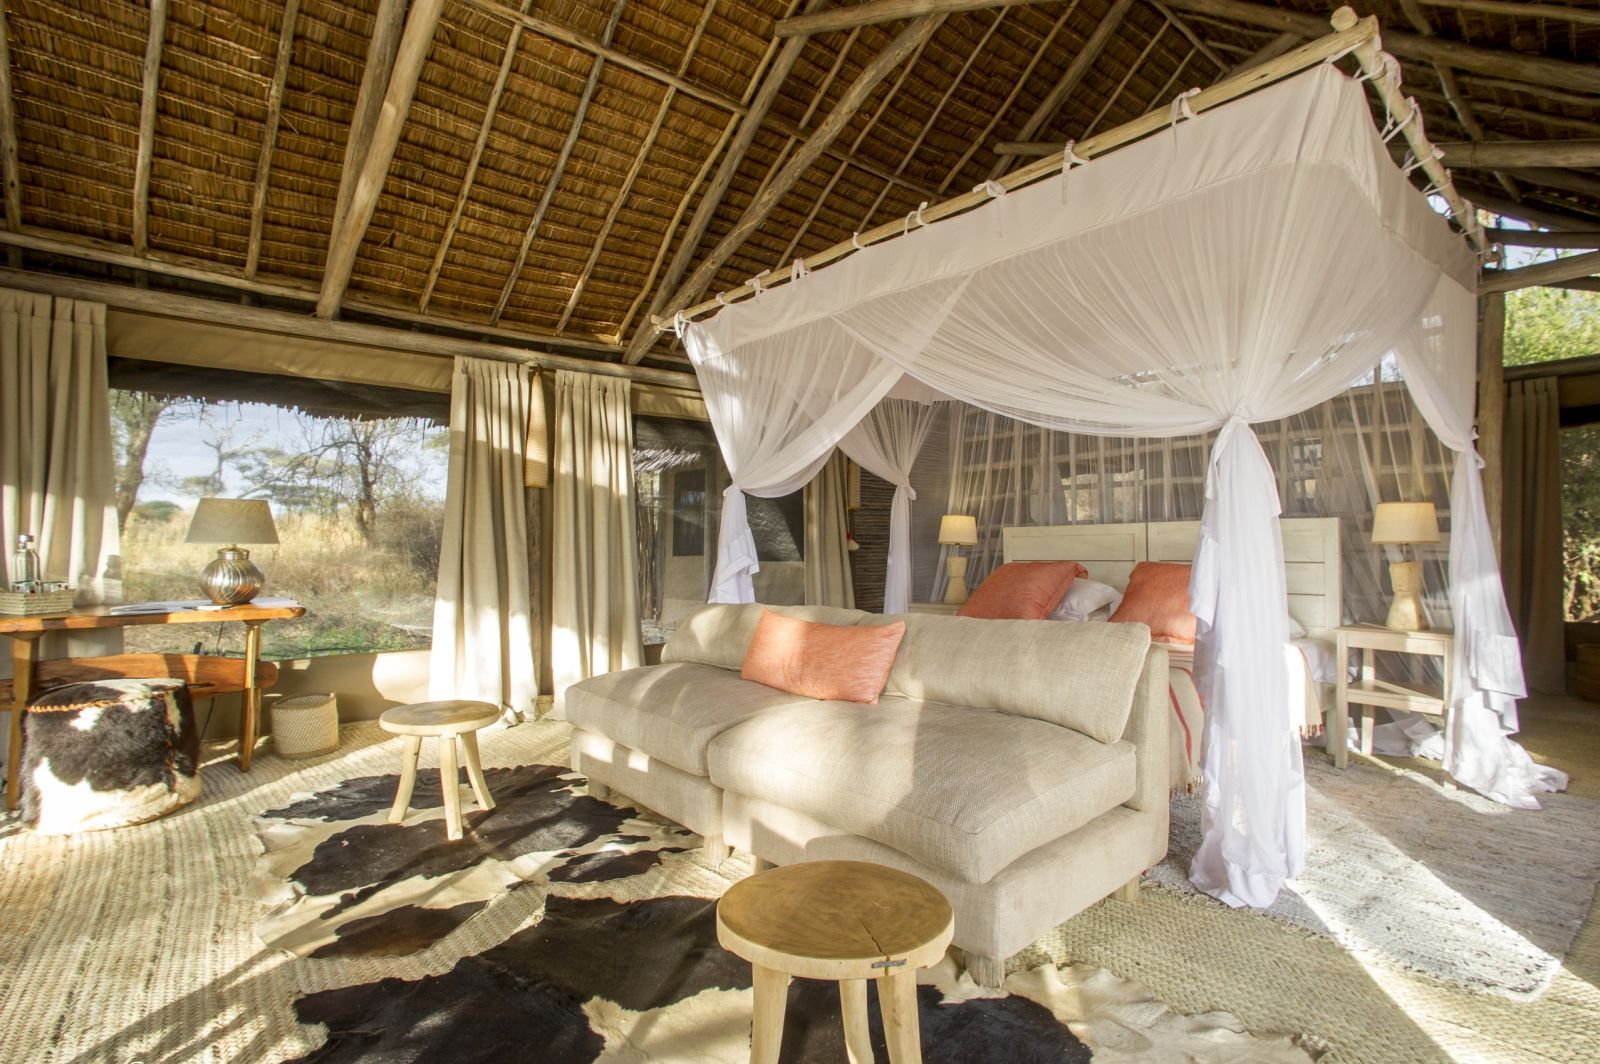 Tent interior at Kuro Tarangire in Tanzania 